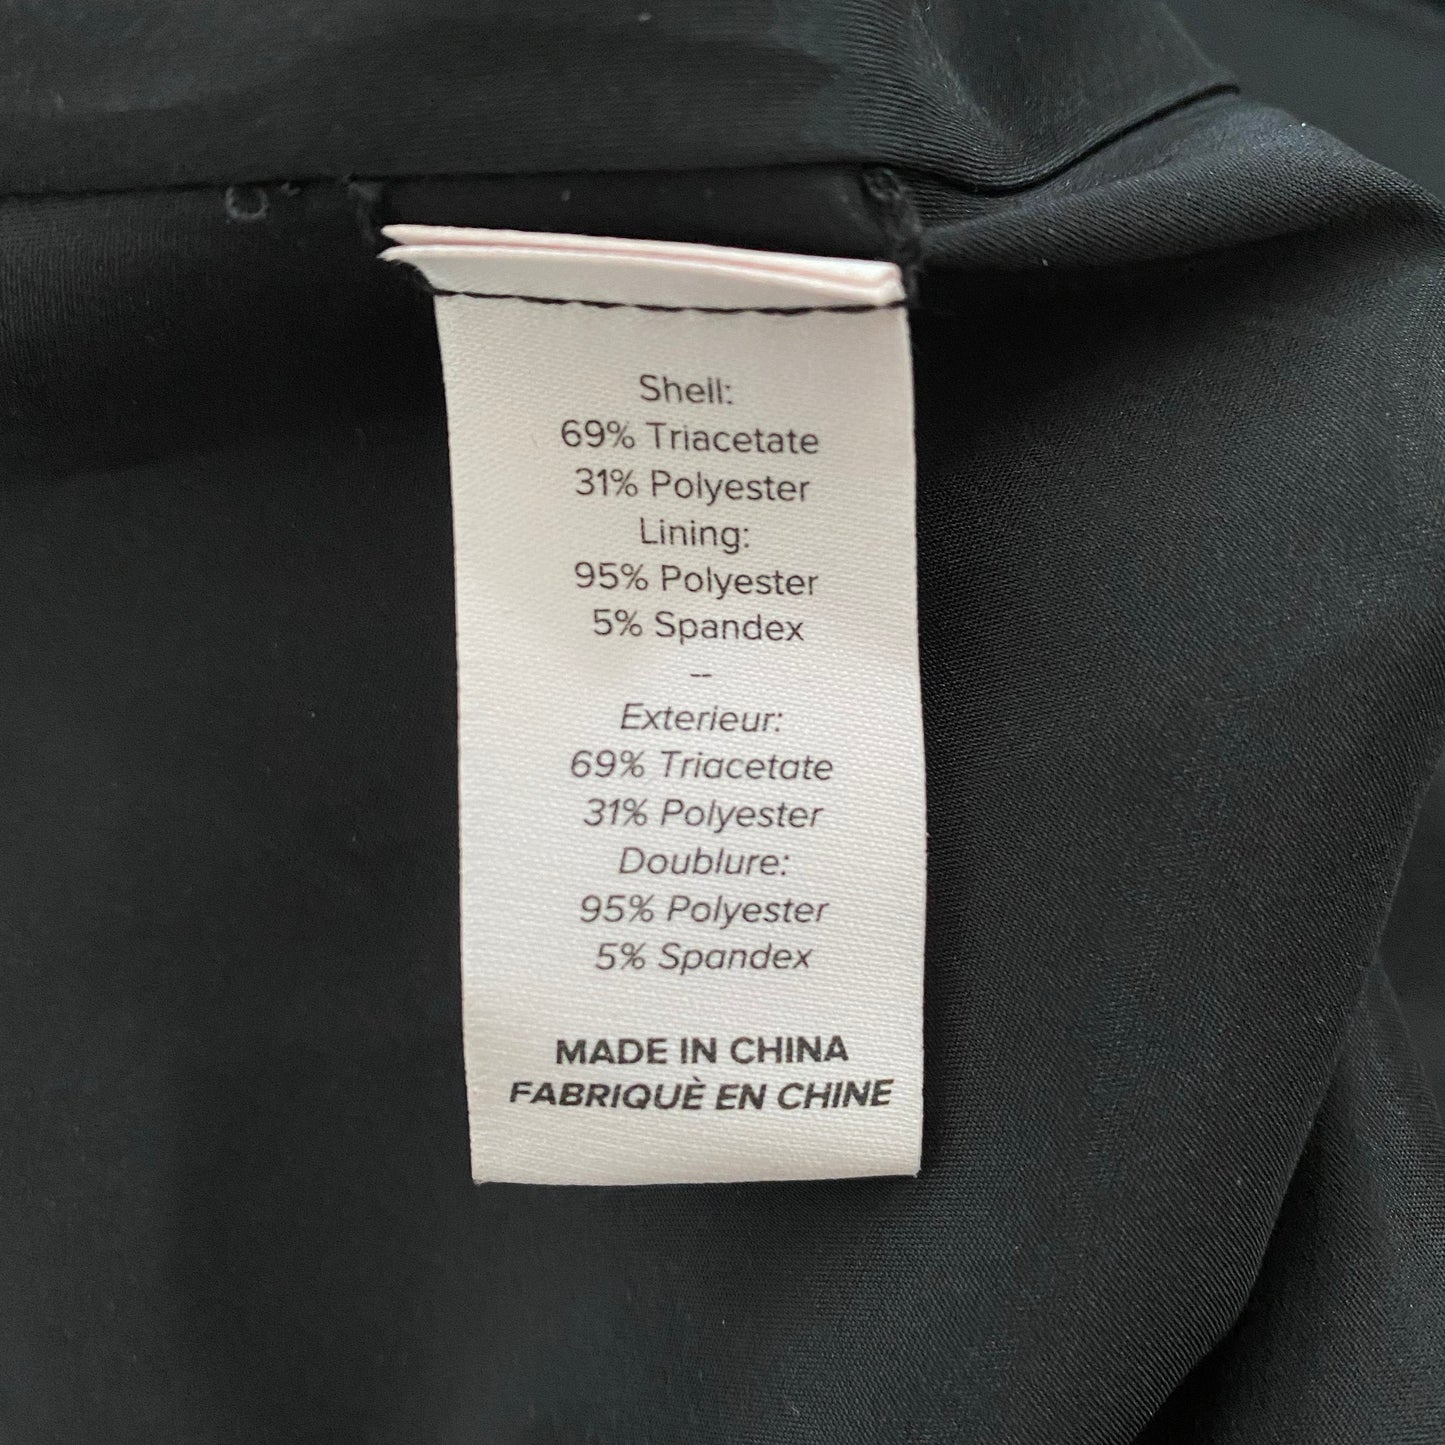 Cinq a Sept "Reiko" Black Crepe Dress with Topstitch detail, size 2